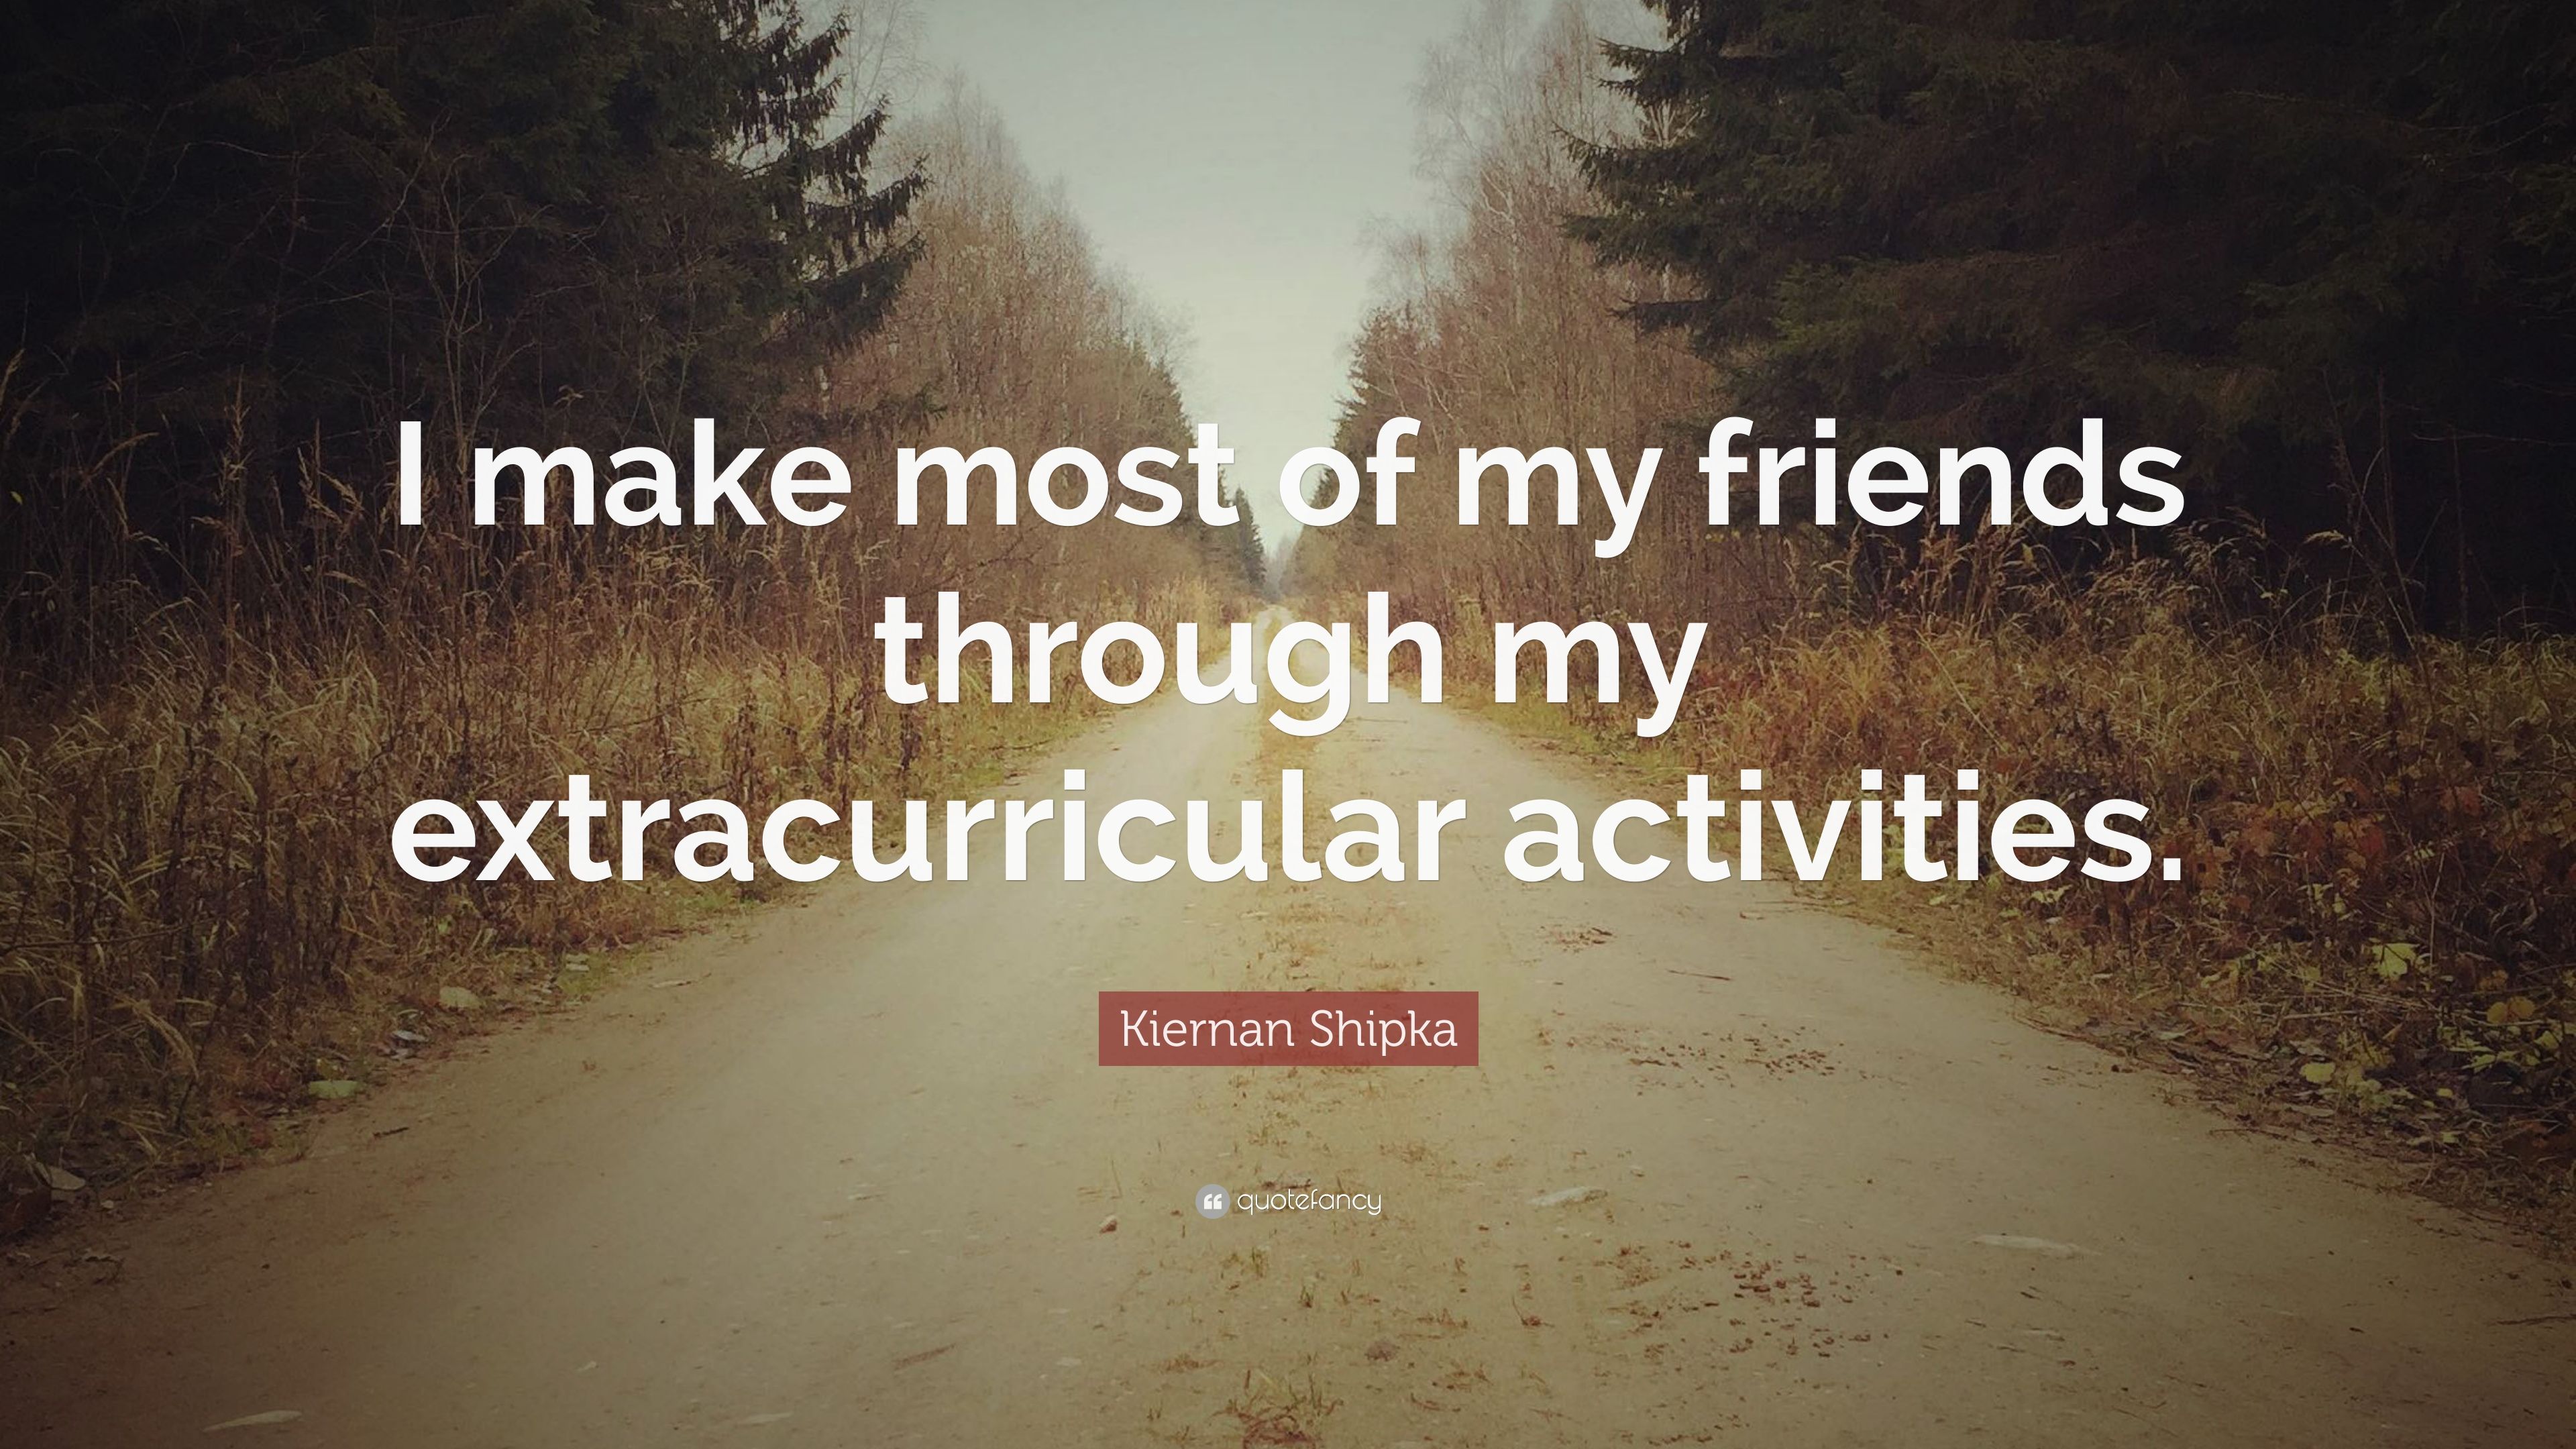 Kiernan Shipka Quote: “I make most of my friends through my